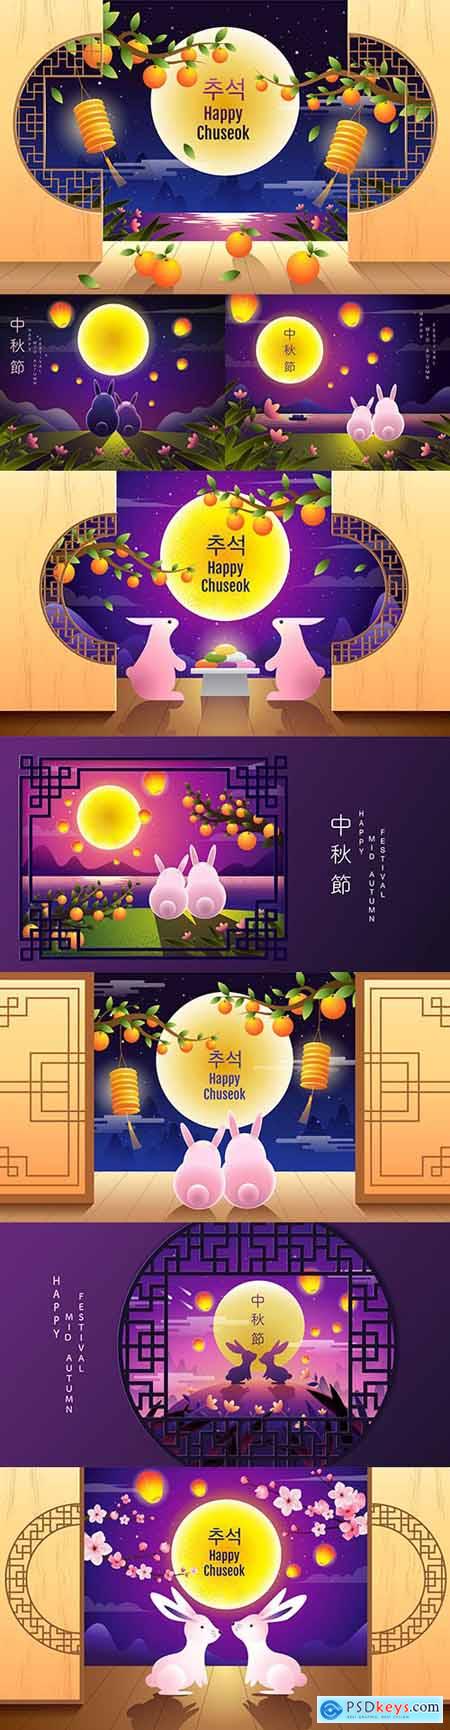 Happy Chuseok lunar holiday of autumn decorative illustrations